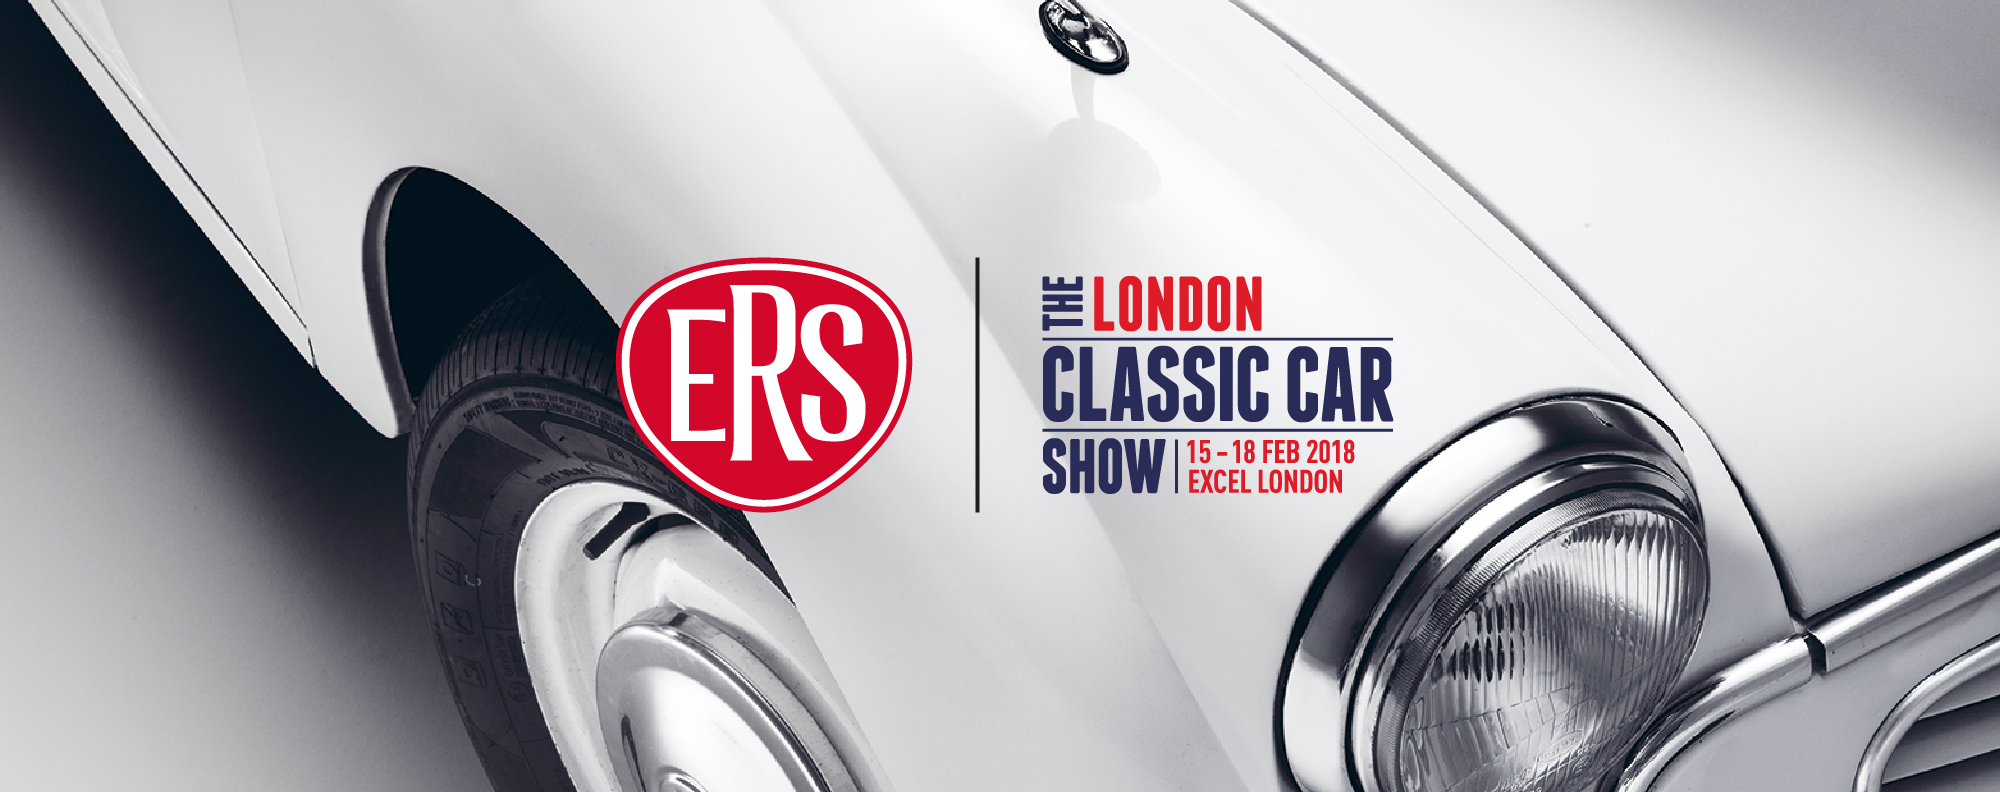 ers-london-classis-car-show-2018.jpg#asset:2265